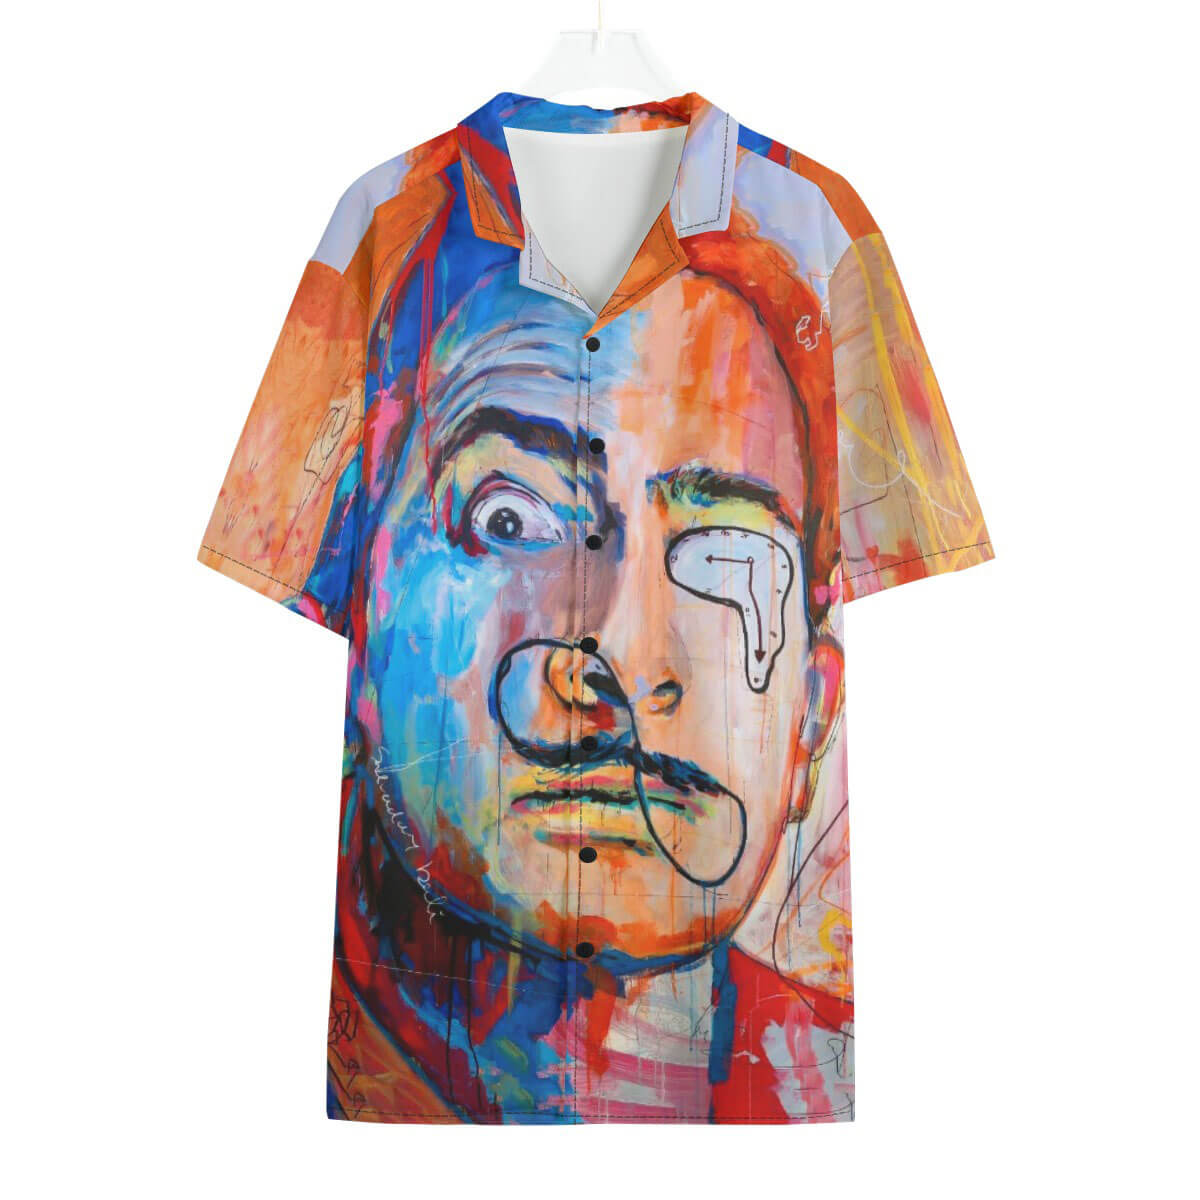 Salvador Dali Portrait Hawaiian Shirt front view with full artwork display